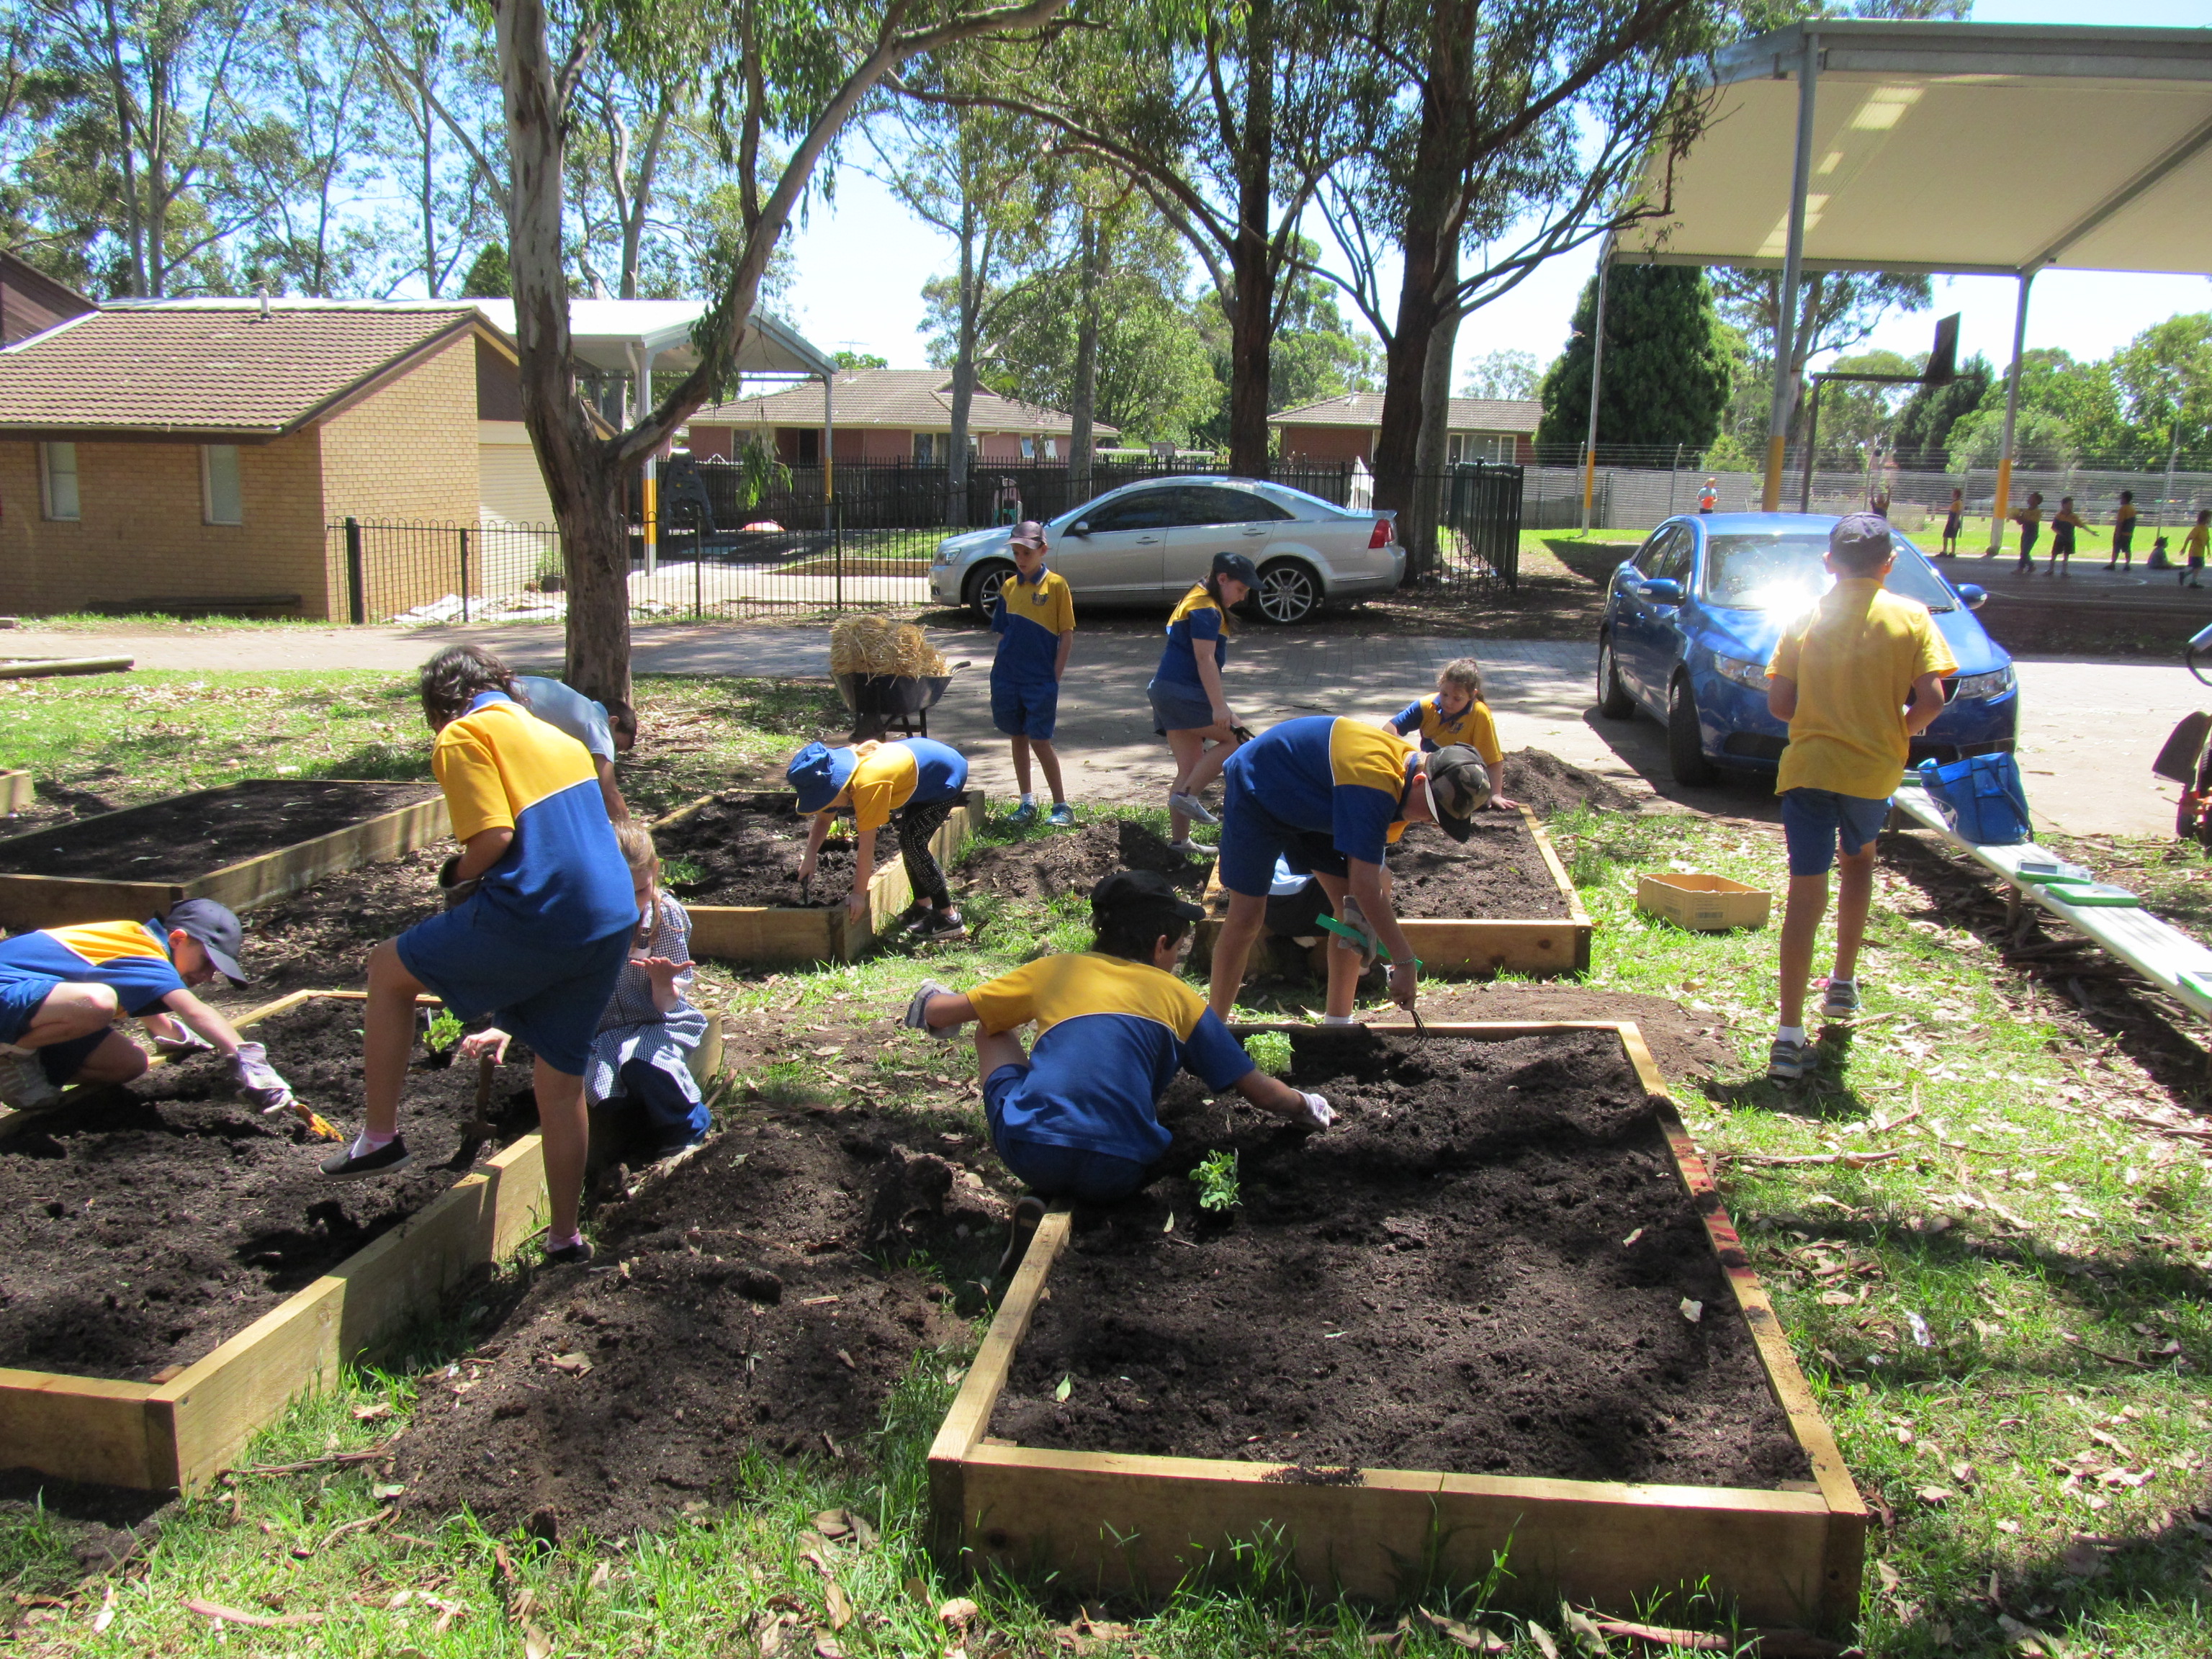 The children are busy gardening.